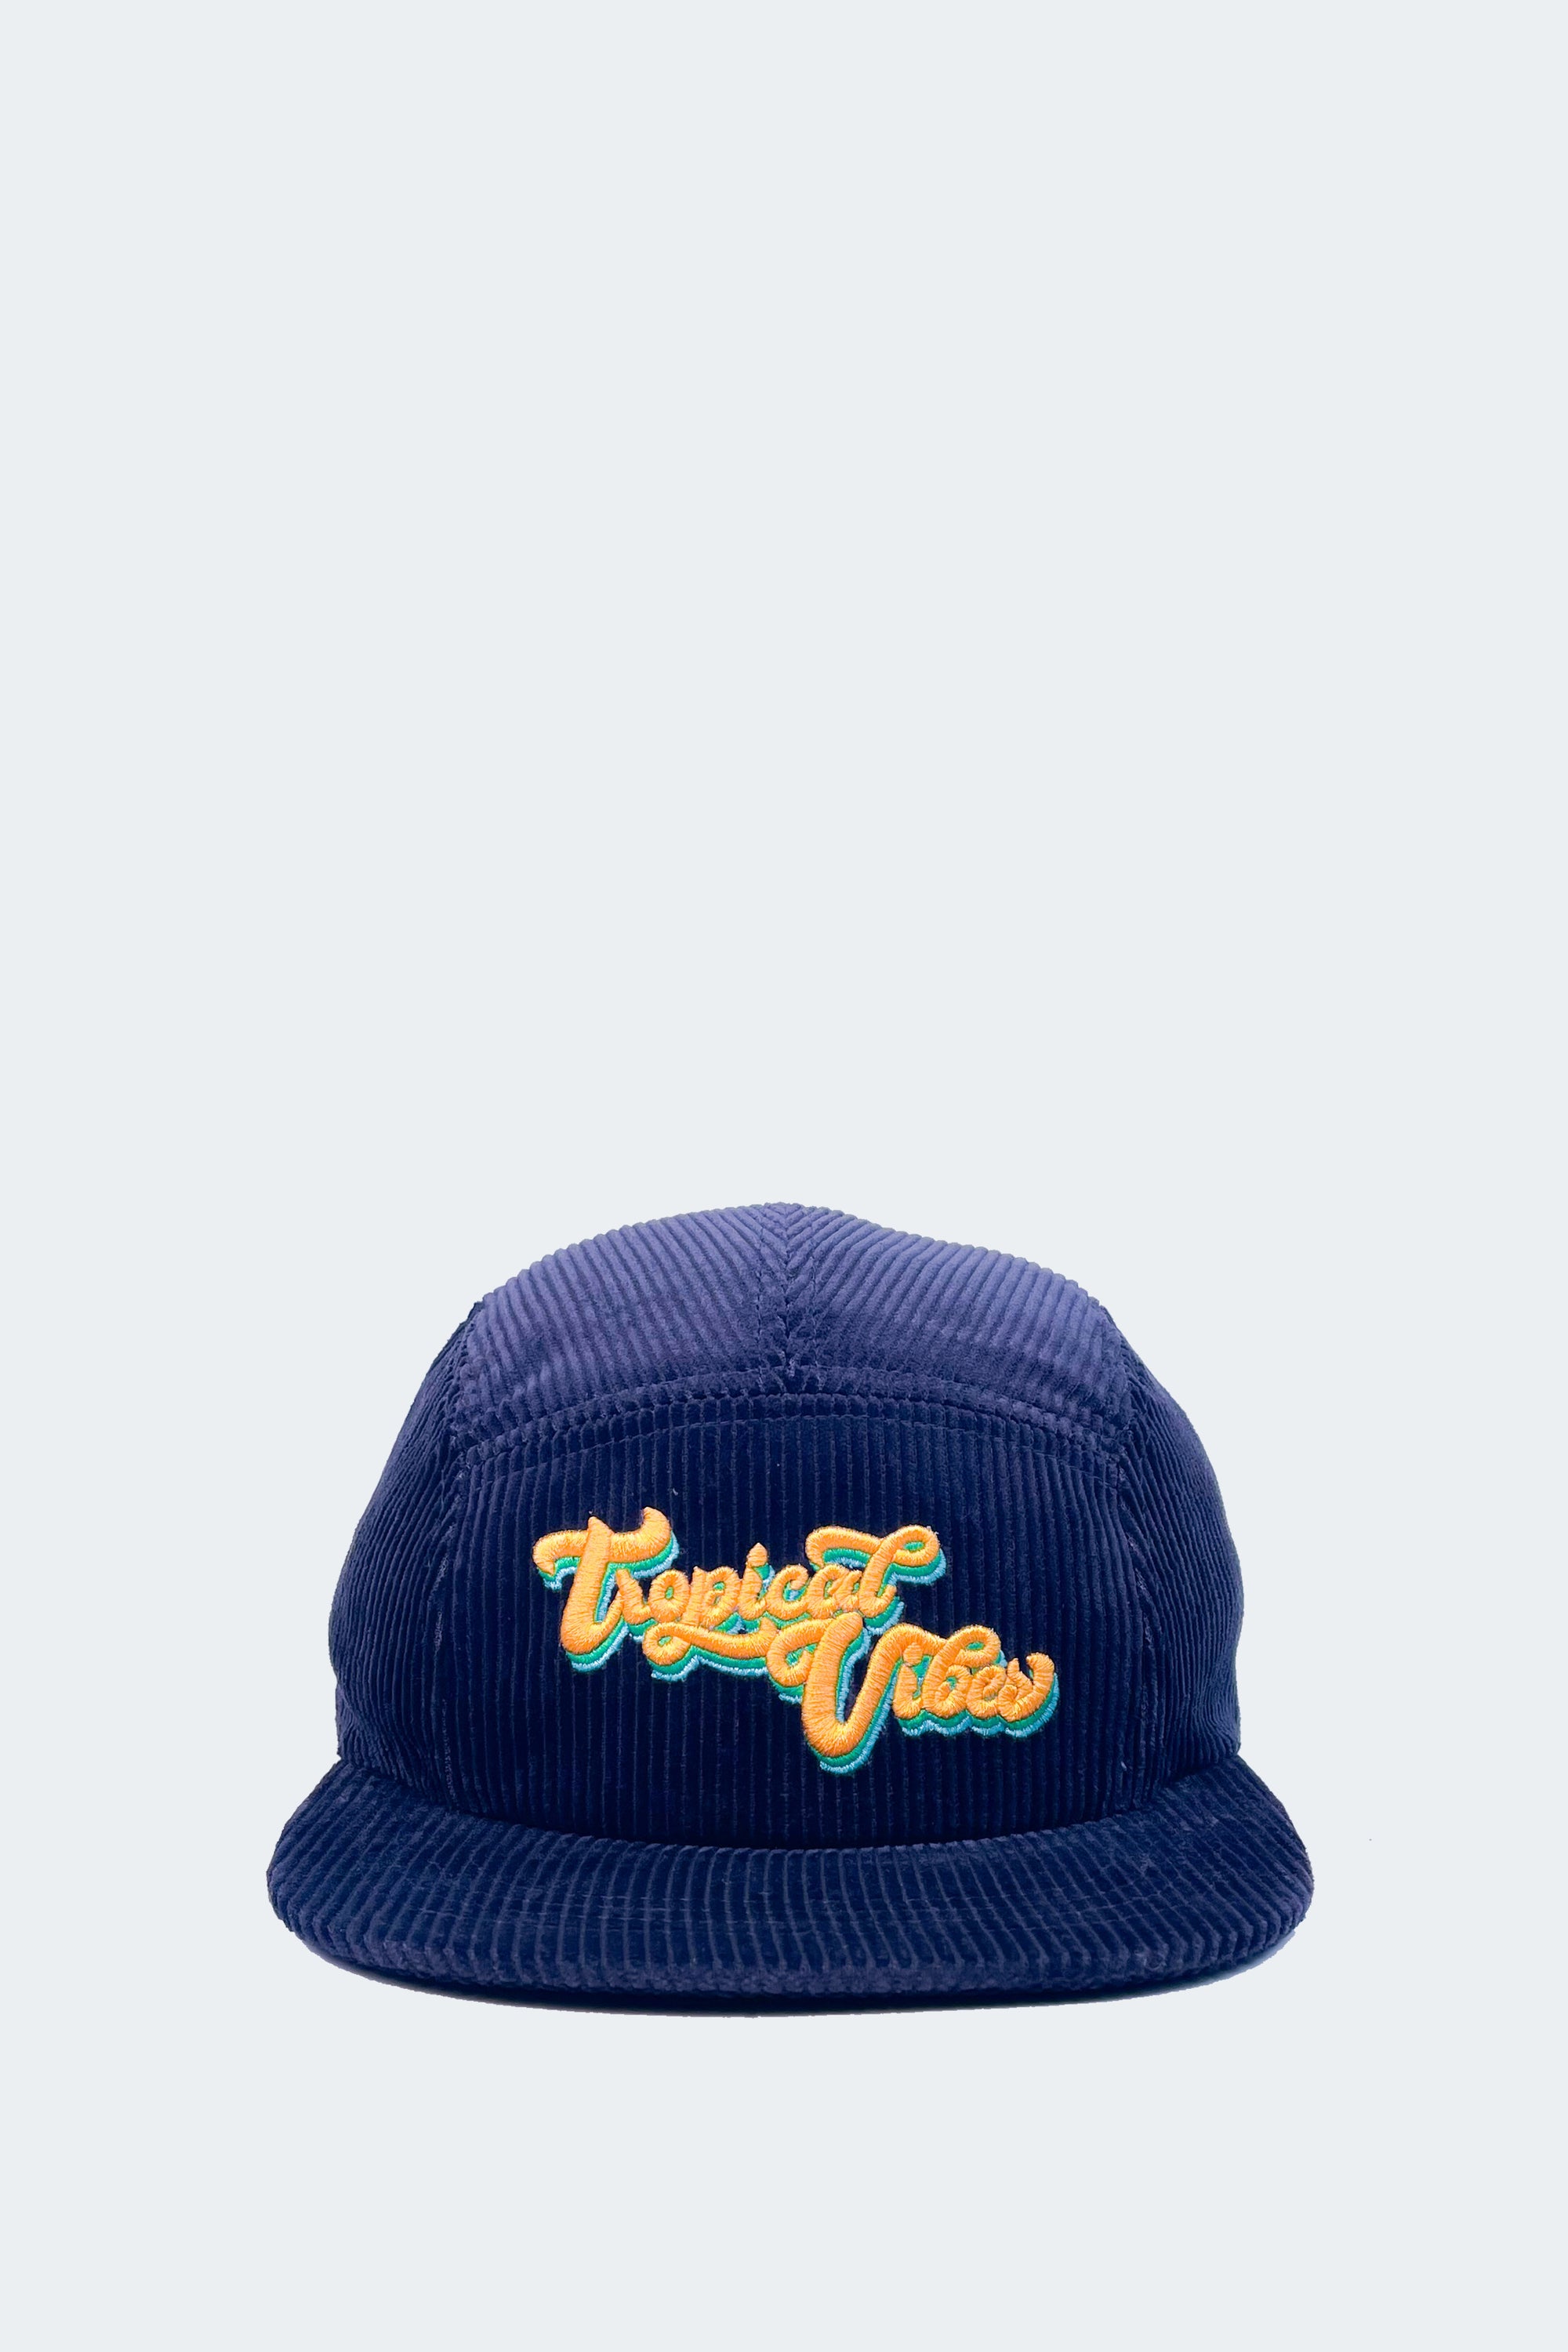 Tropical Vibes Caps